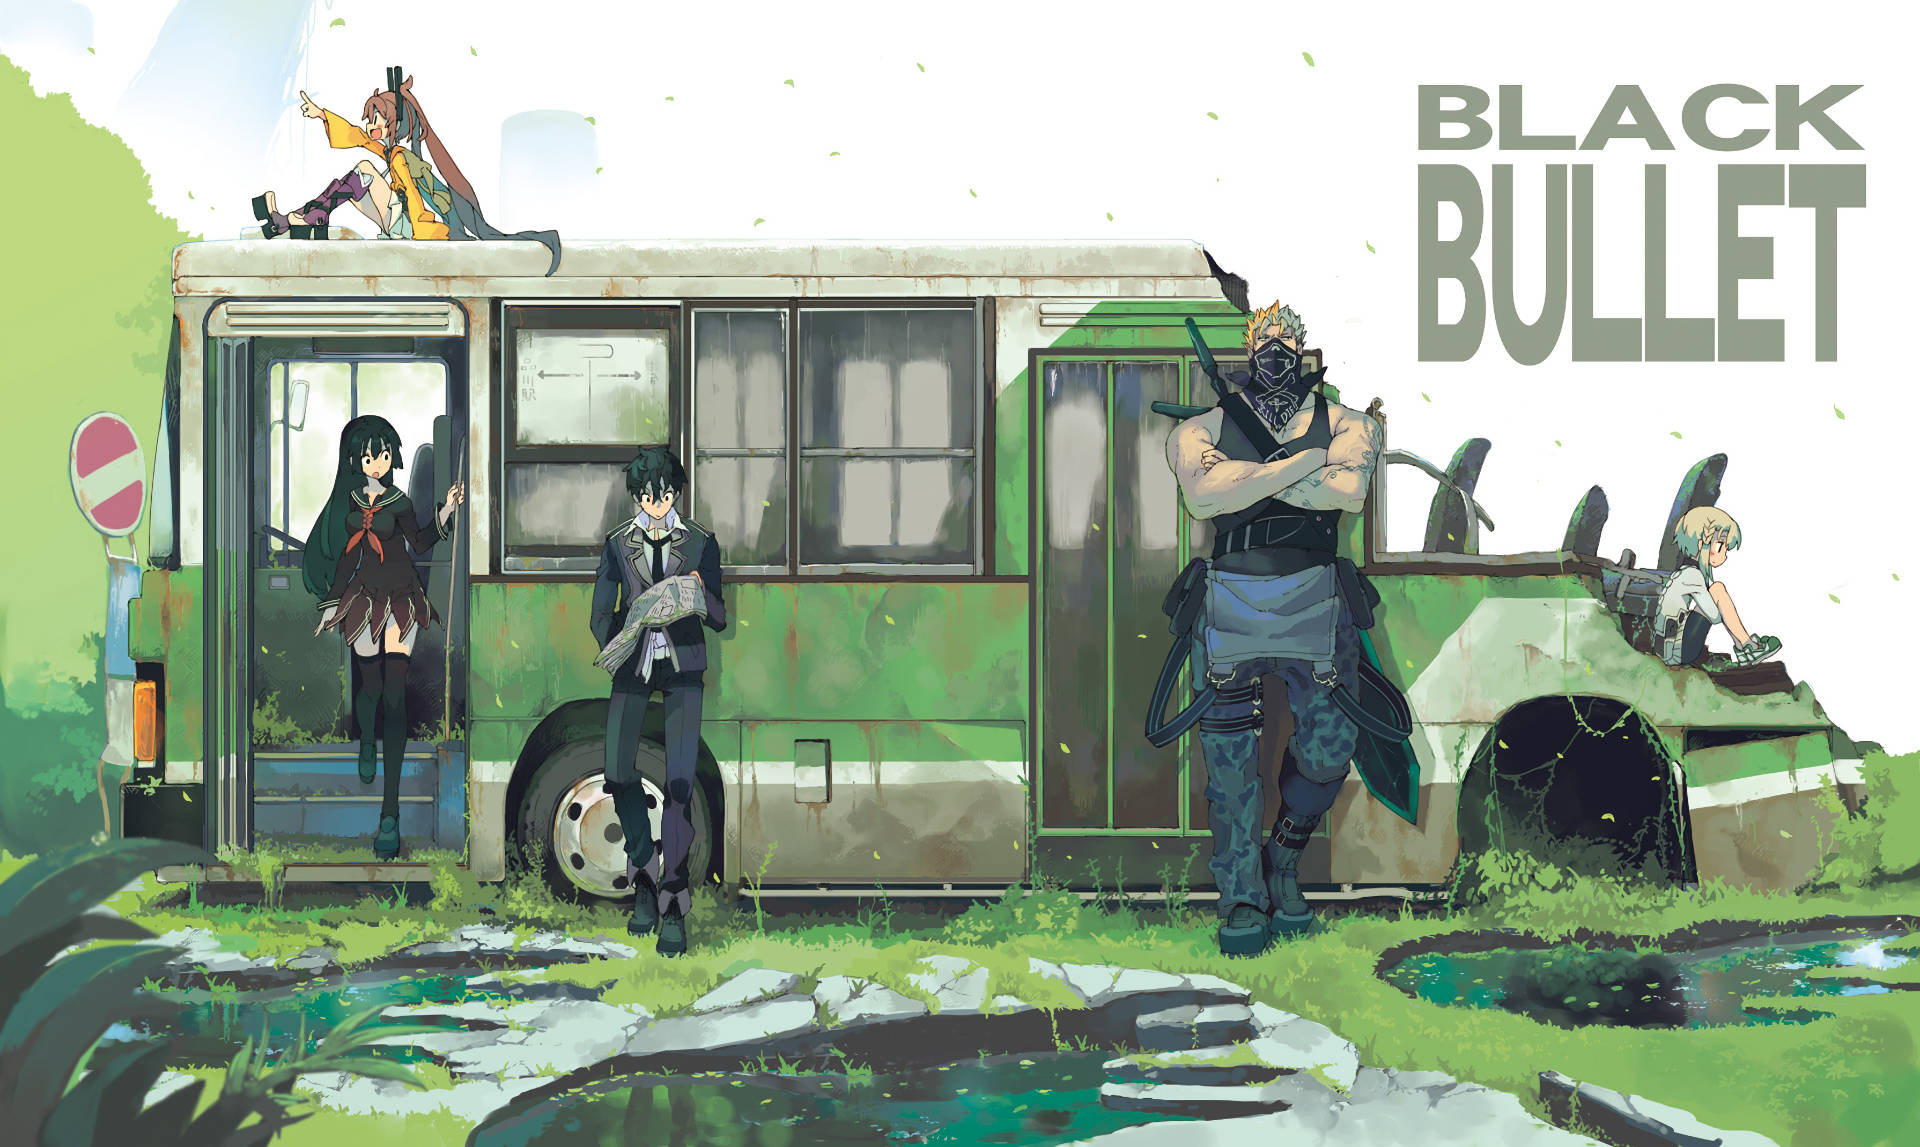 Black Bullet Manga Cover Picture